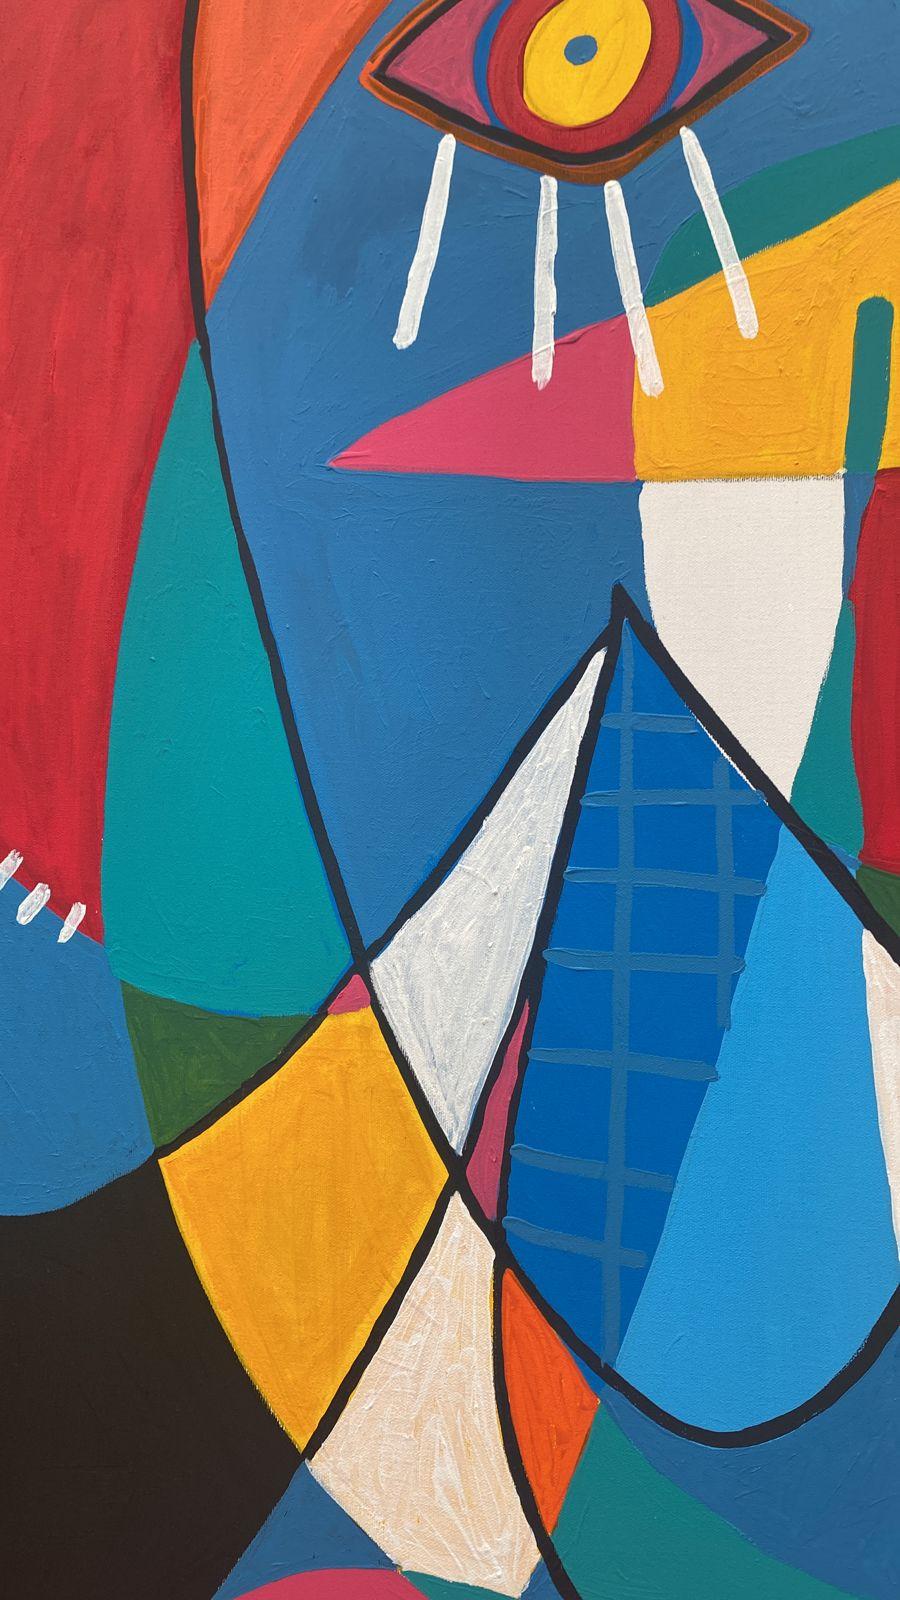 Contemporary Art, Abstract Painting
Acrylic on canvas
150x150cm
Signed 




About the artist
Enrique Pichardo (Mexico City, 1973) graduated from Escuela Nacional de Pintura, Escultura y Grabado (ENPEG) “La Esmeralda”. As a Mexican Contemporary